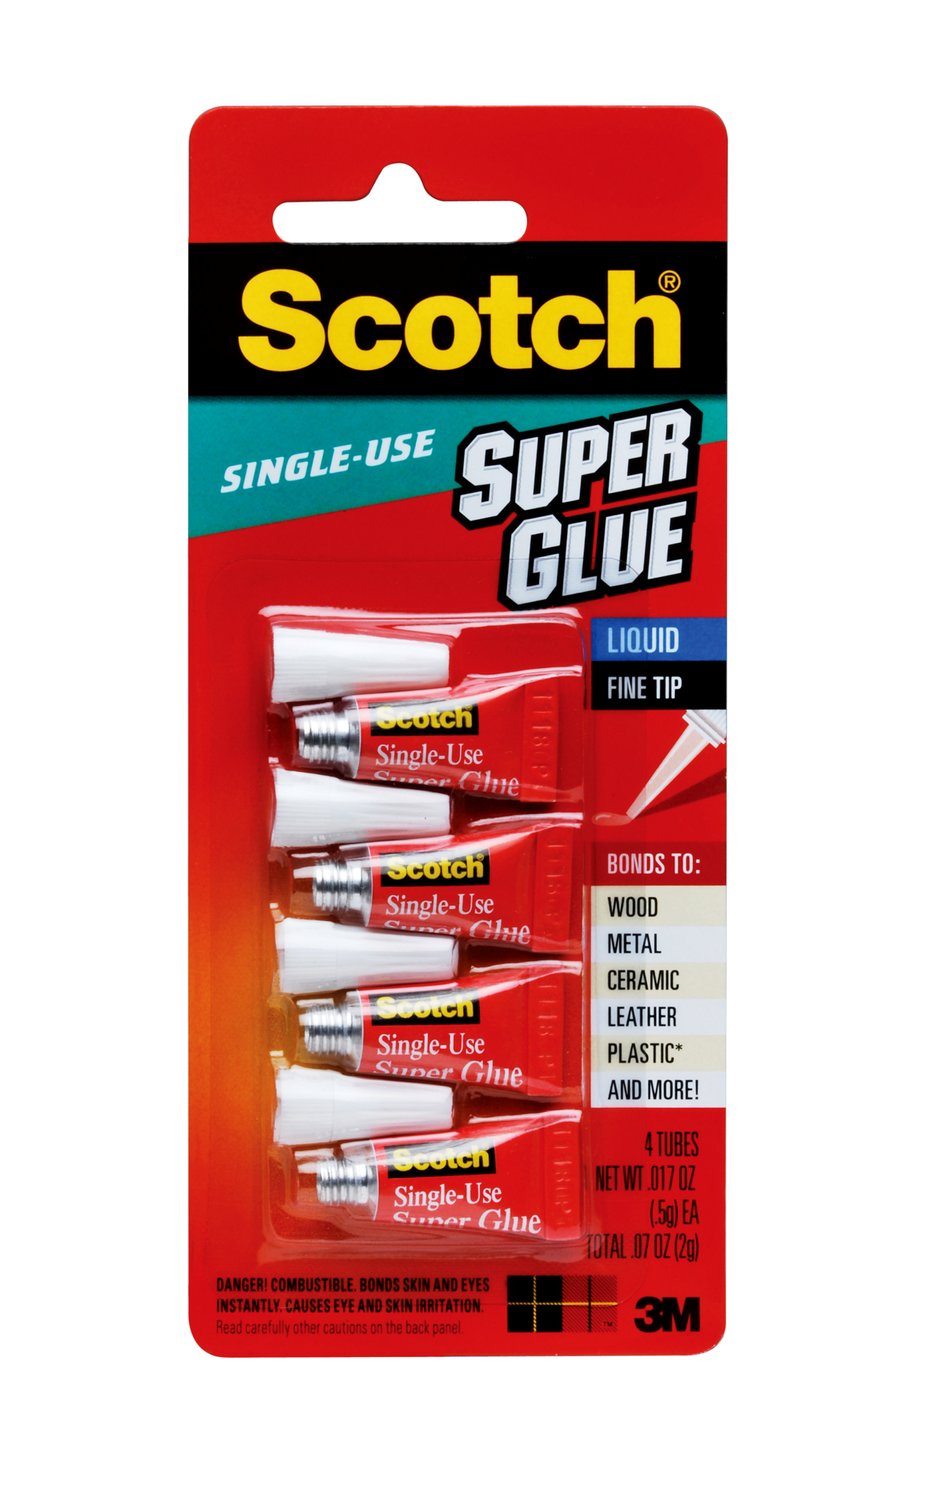 7000047643 - Scotch Super Glue Liquid AD114, 4-Pack of single-use tubes, .017 oz
each